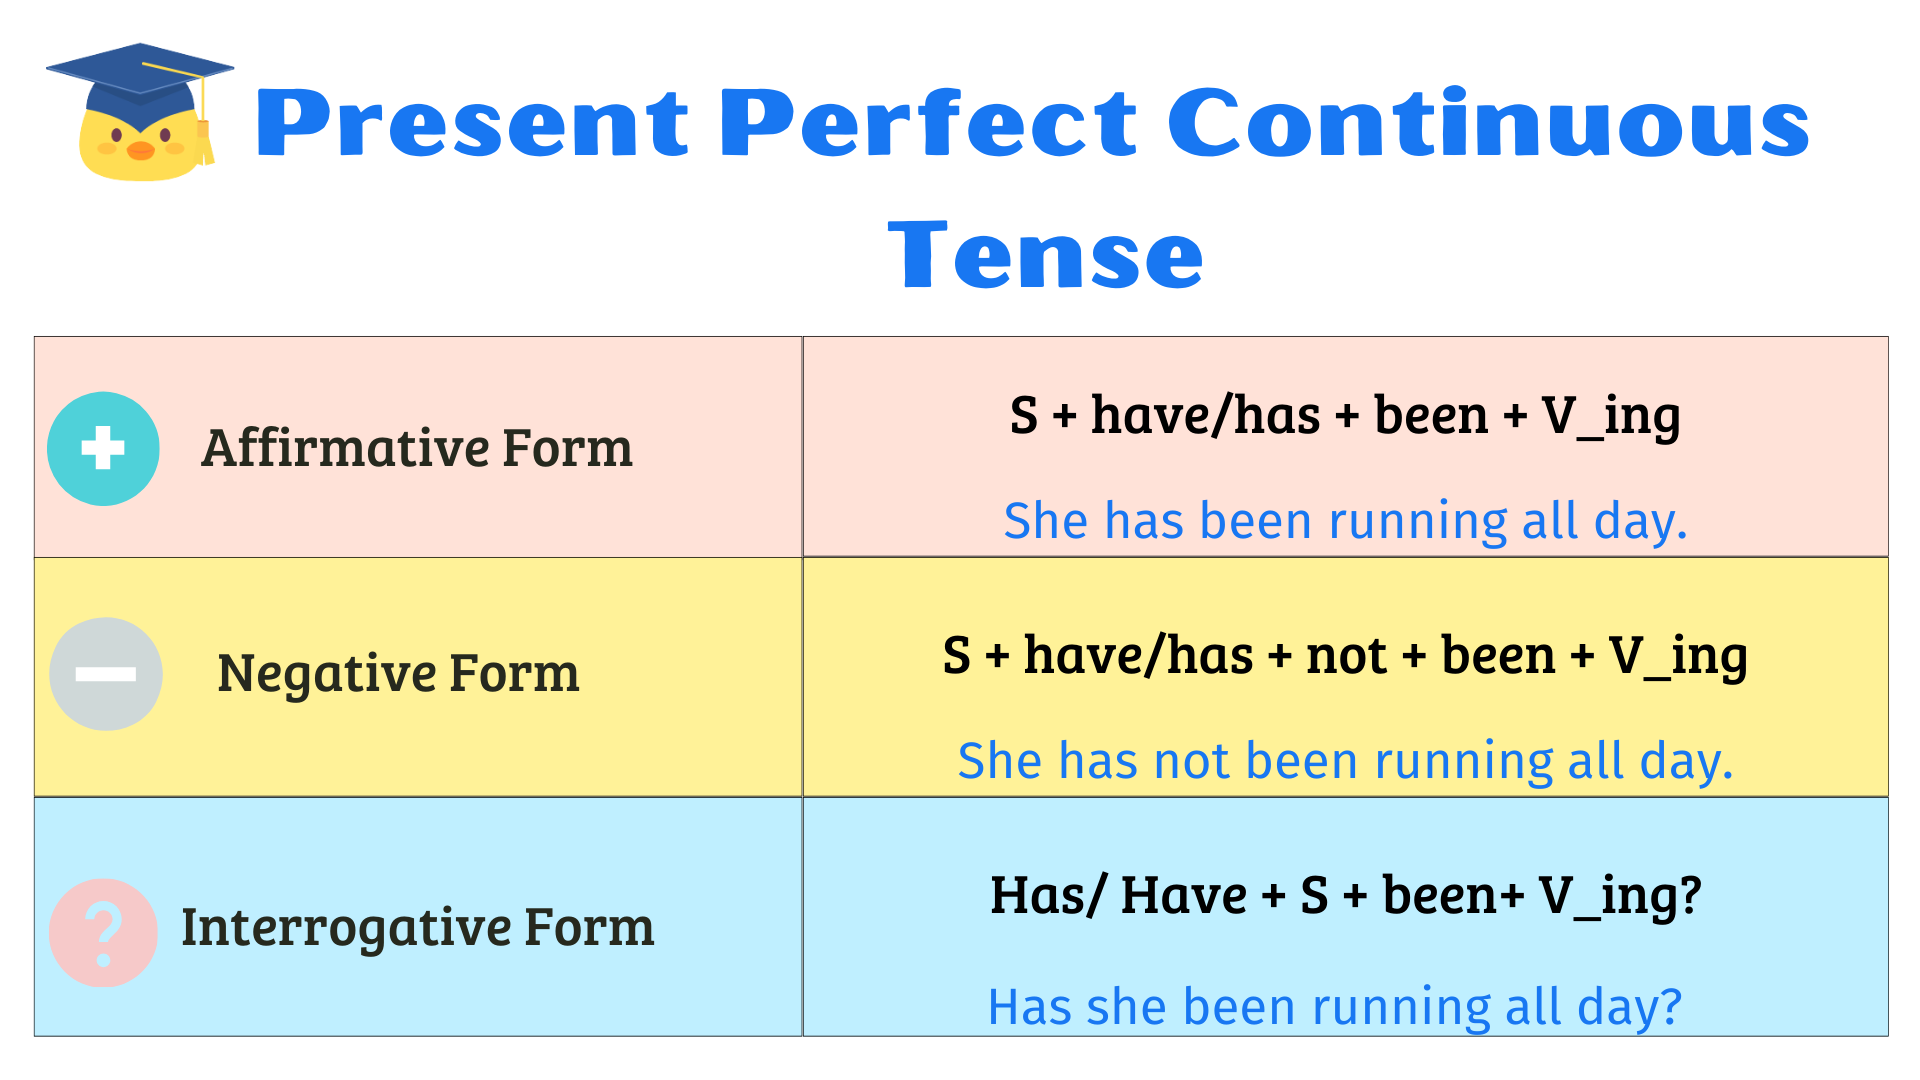 Present Perfect Continuous tense